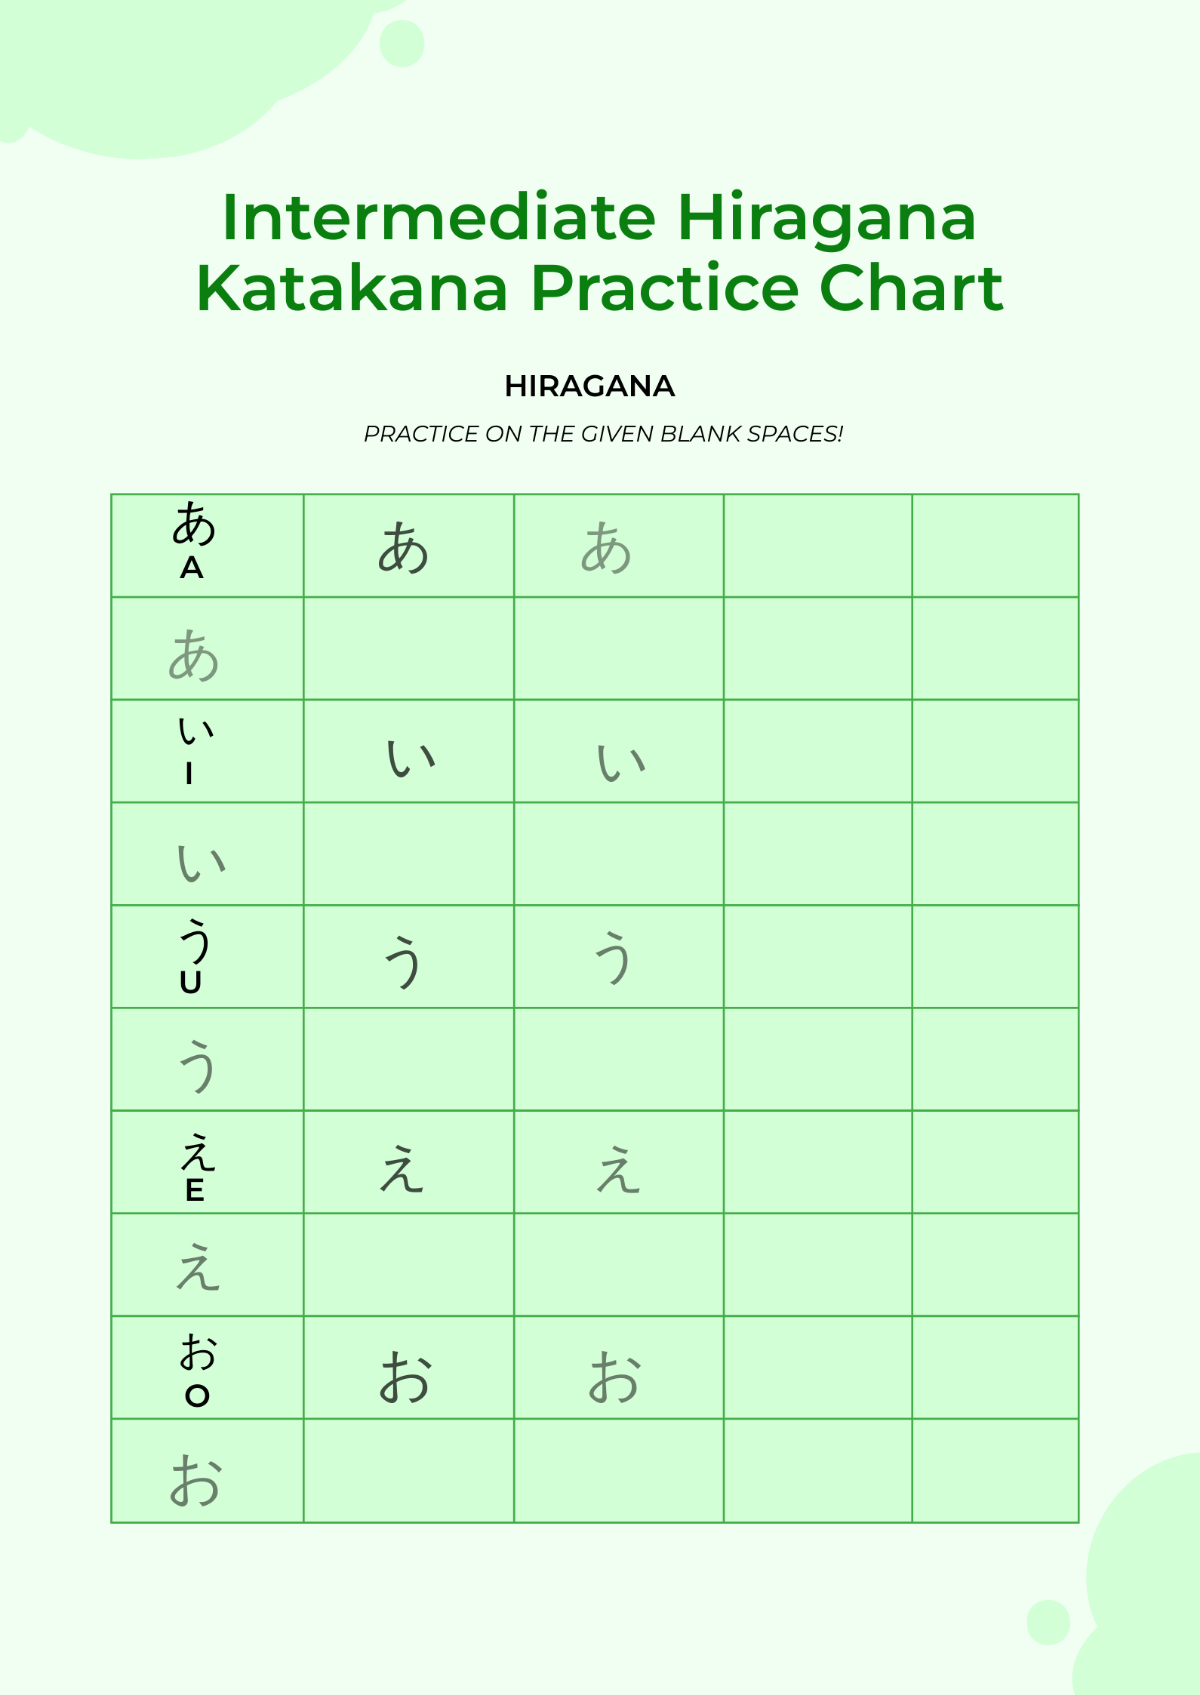 Intermediate Hiragana Katakana Practice Chart Template